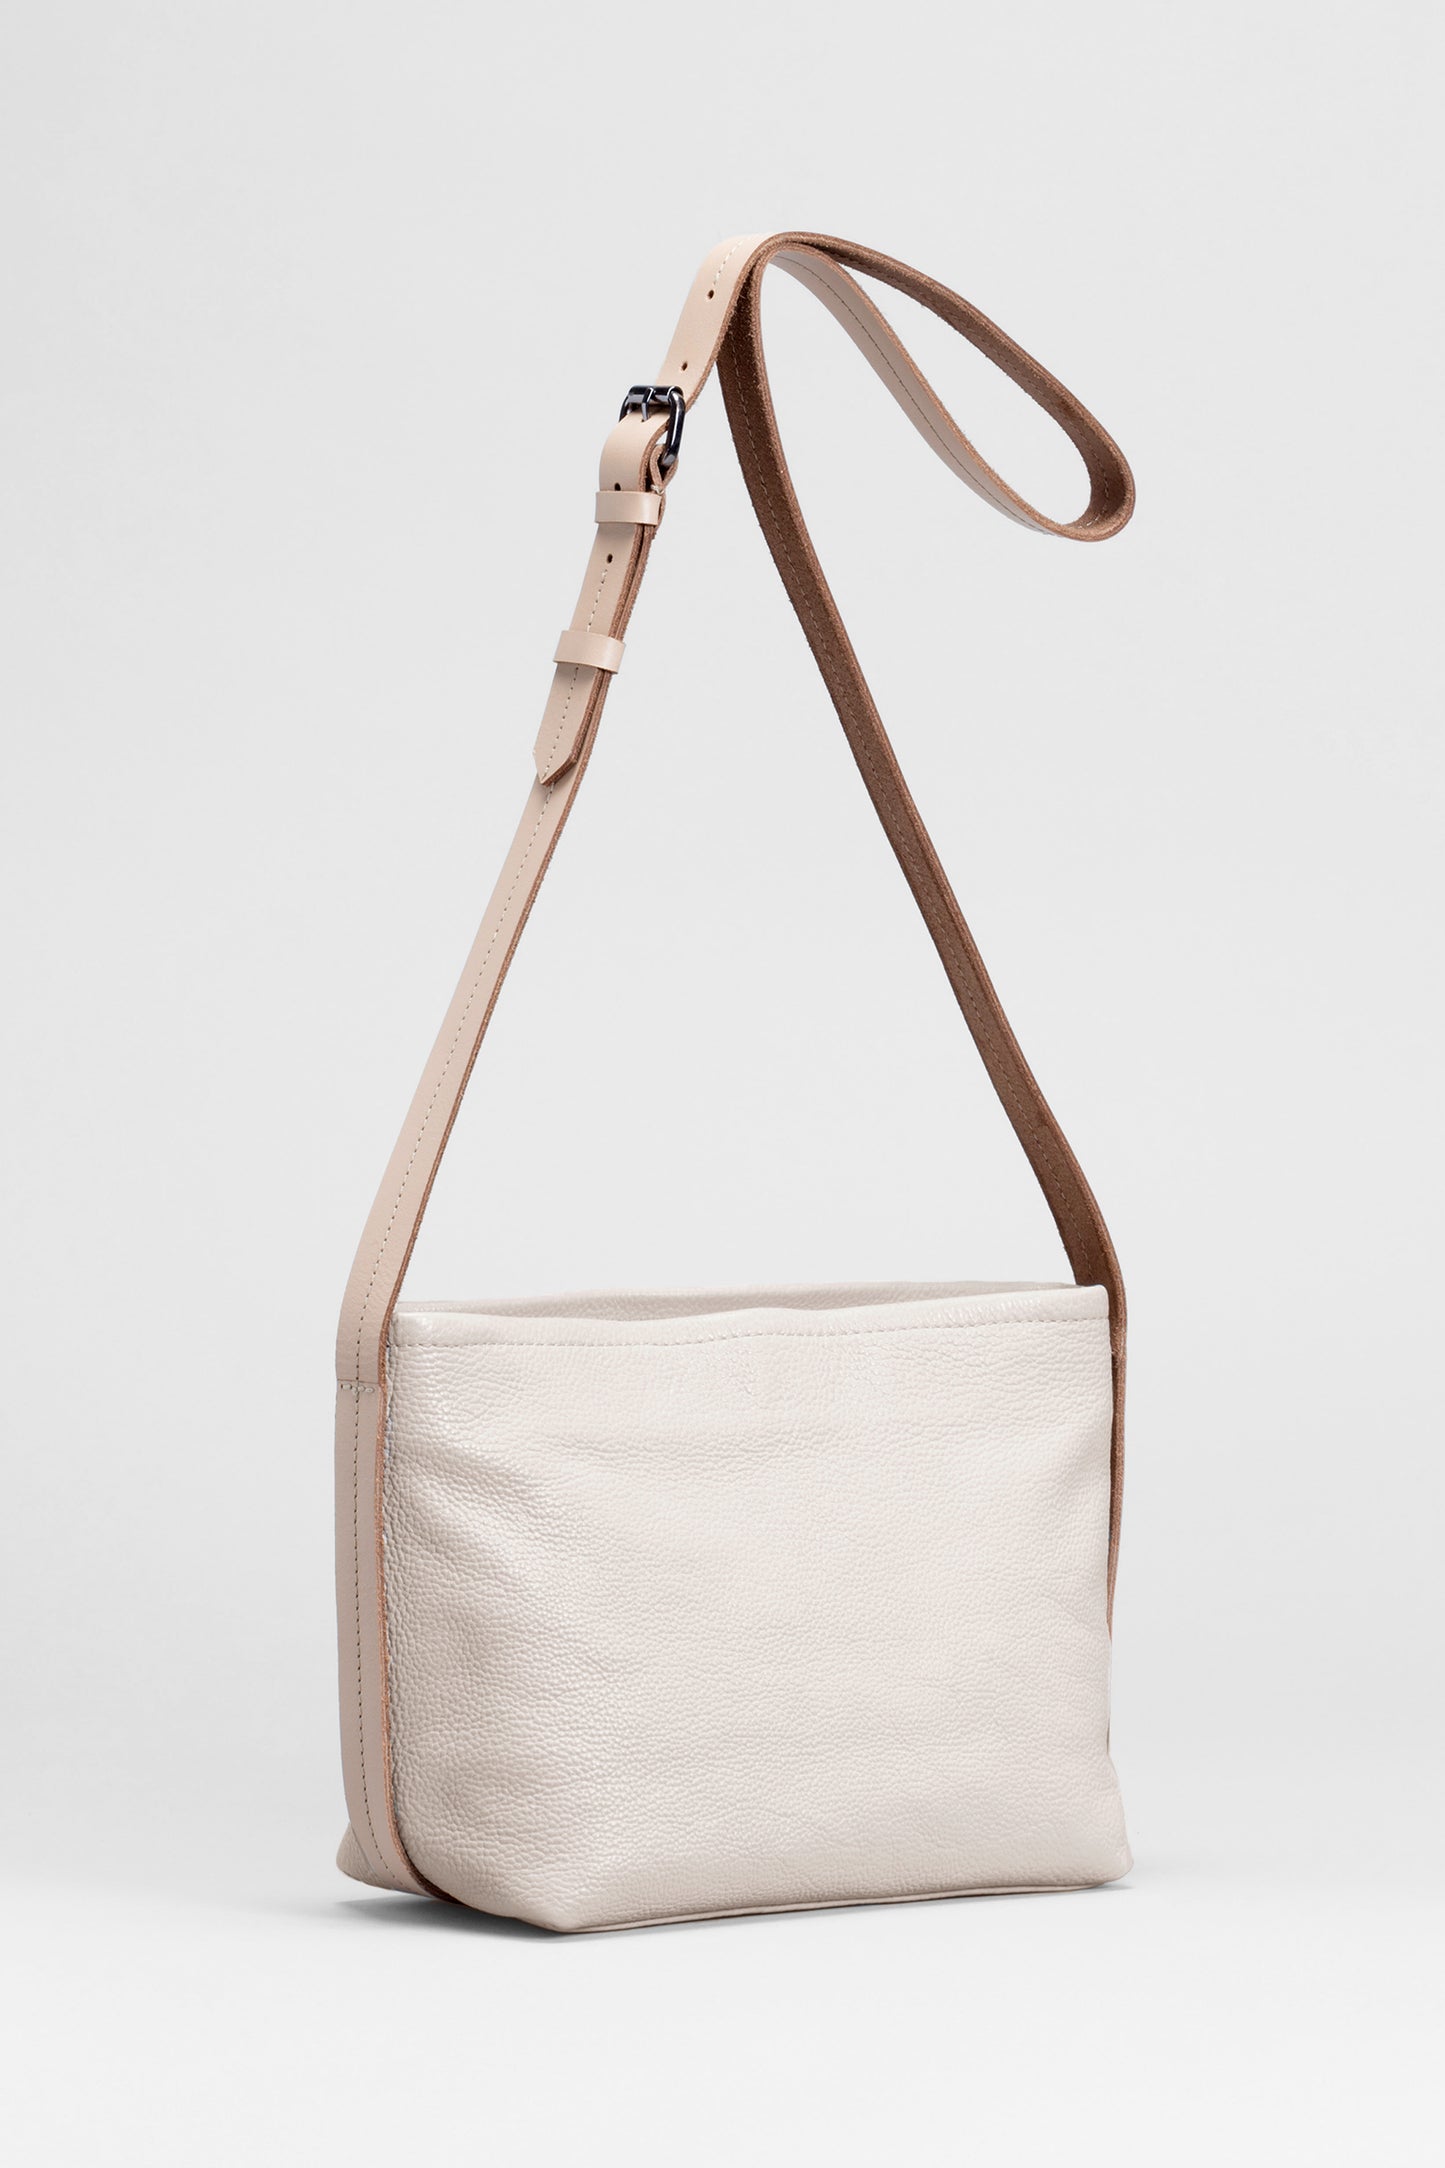 Canutte Leather Bag Front | BLANC / NATURAL